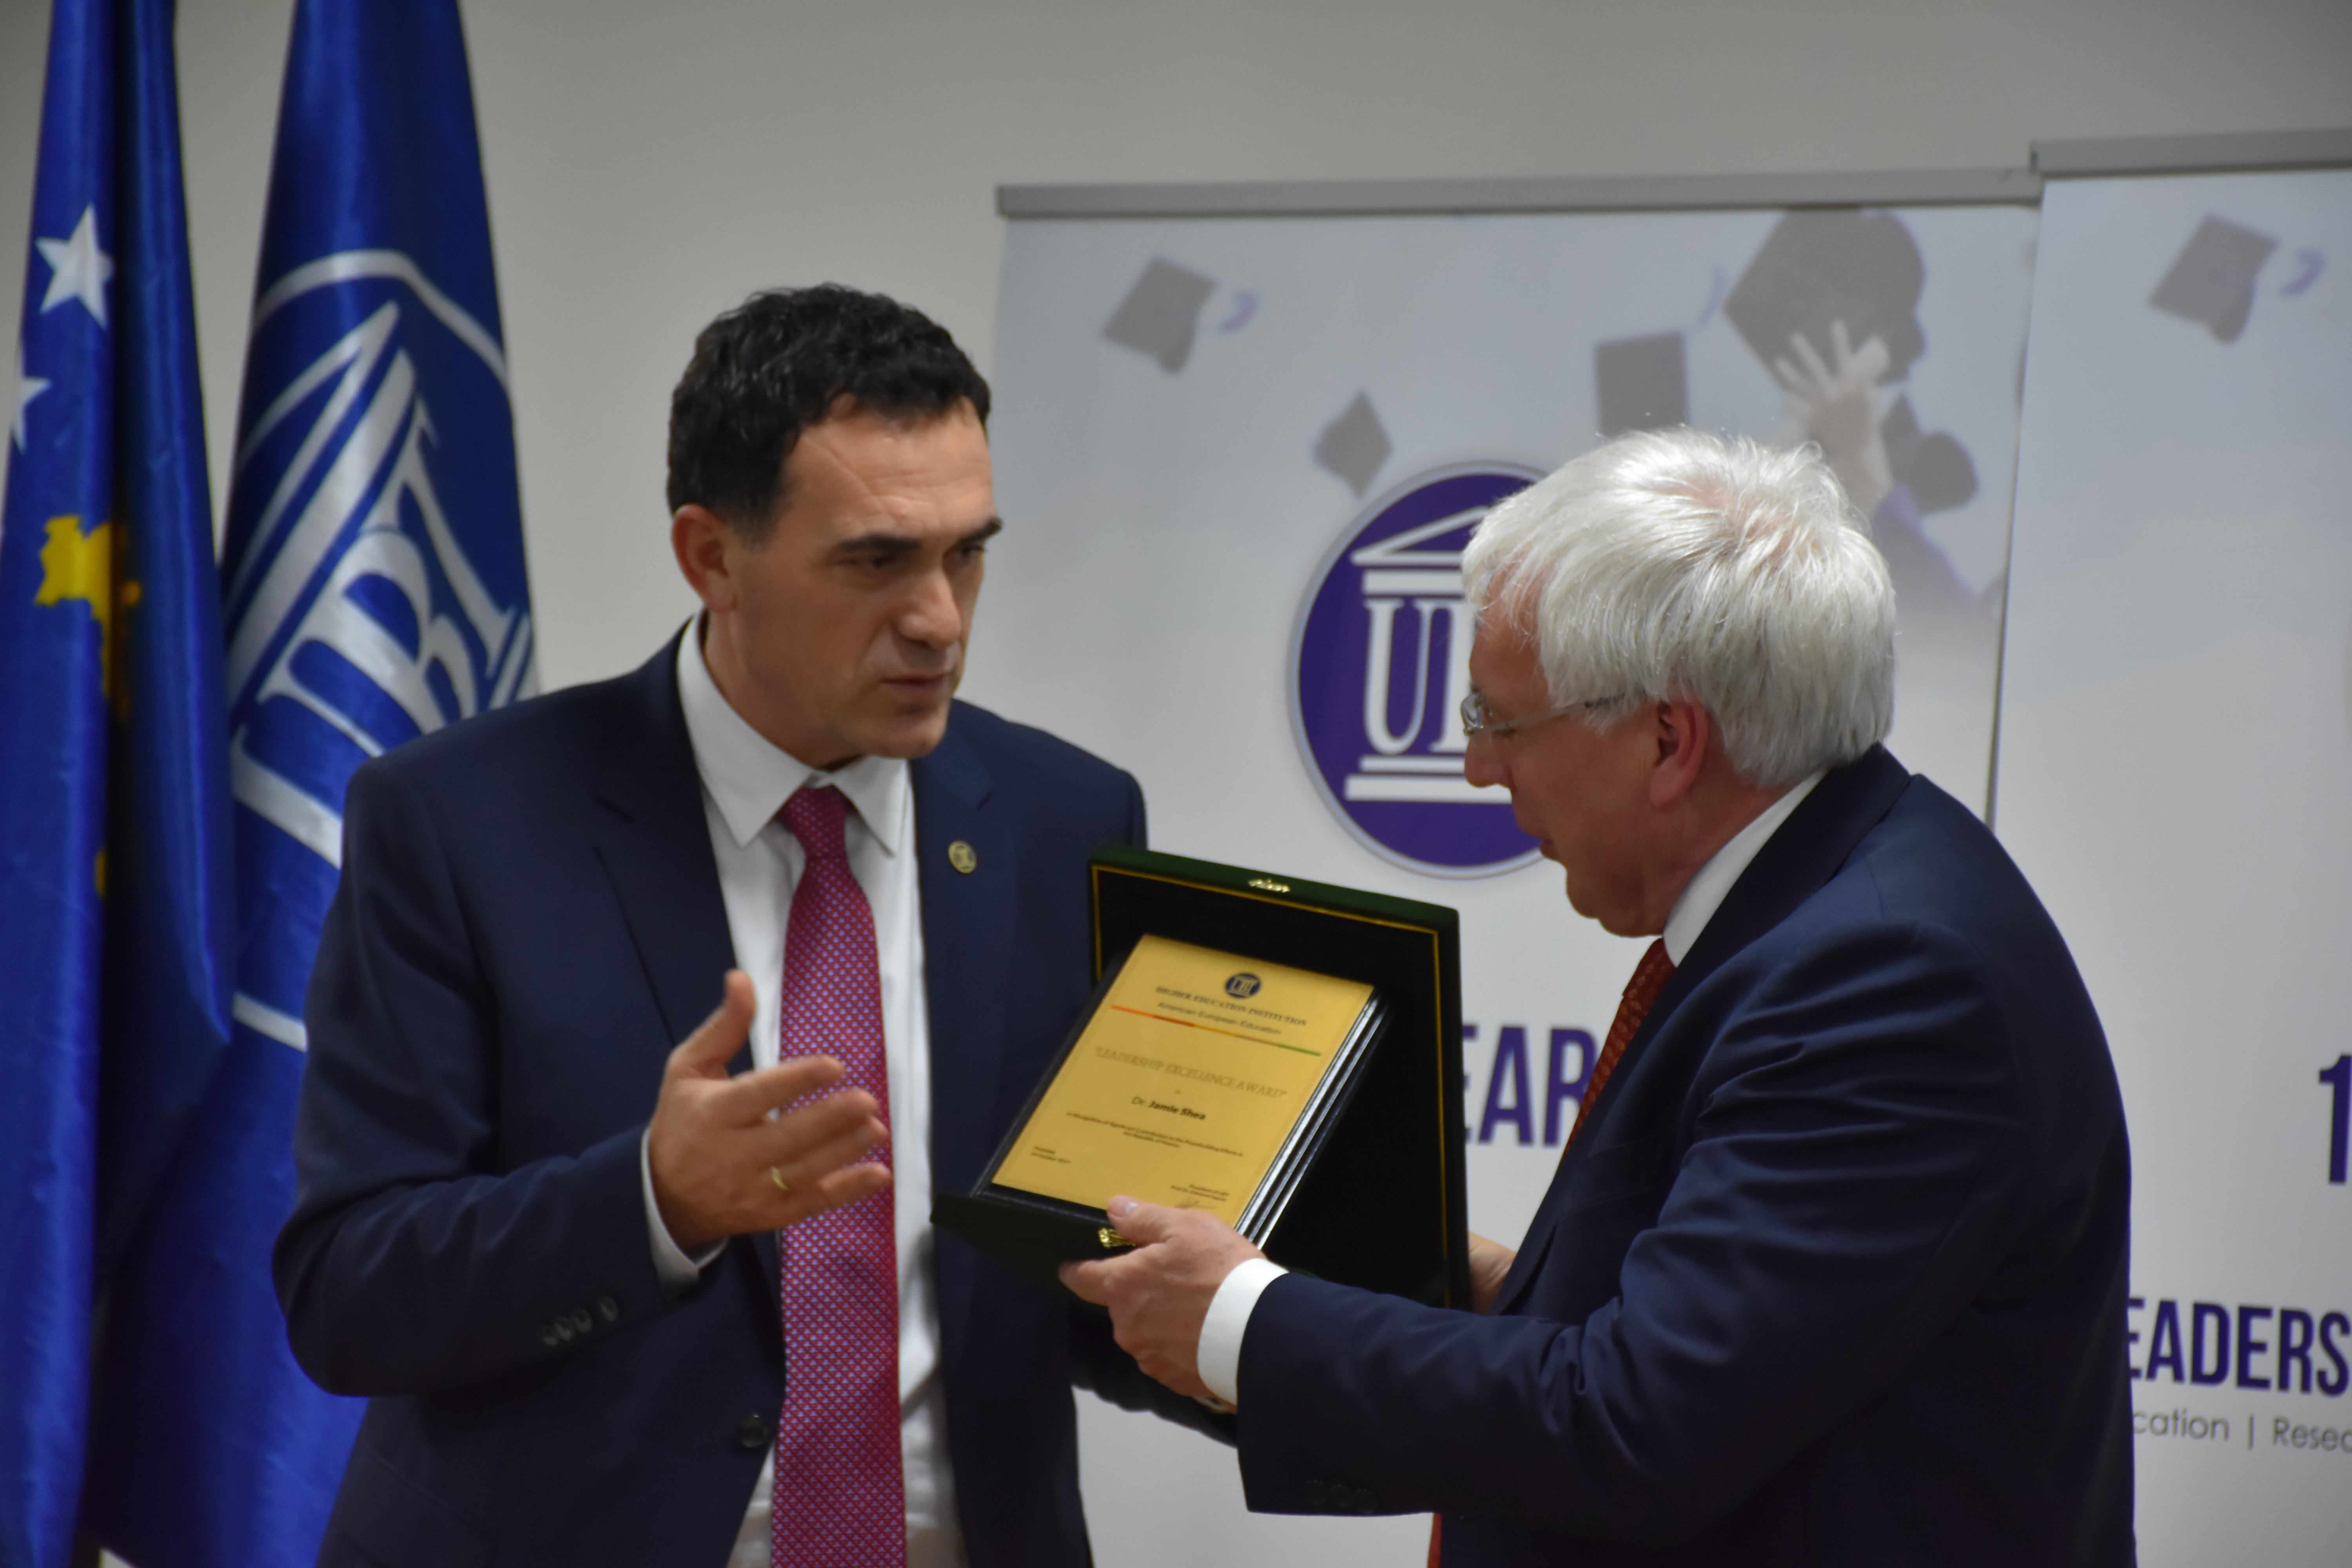 Jamie Shae nderohet nga UBT me Çimin “Excellence Leadership Award”